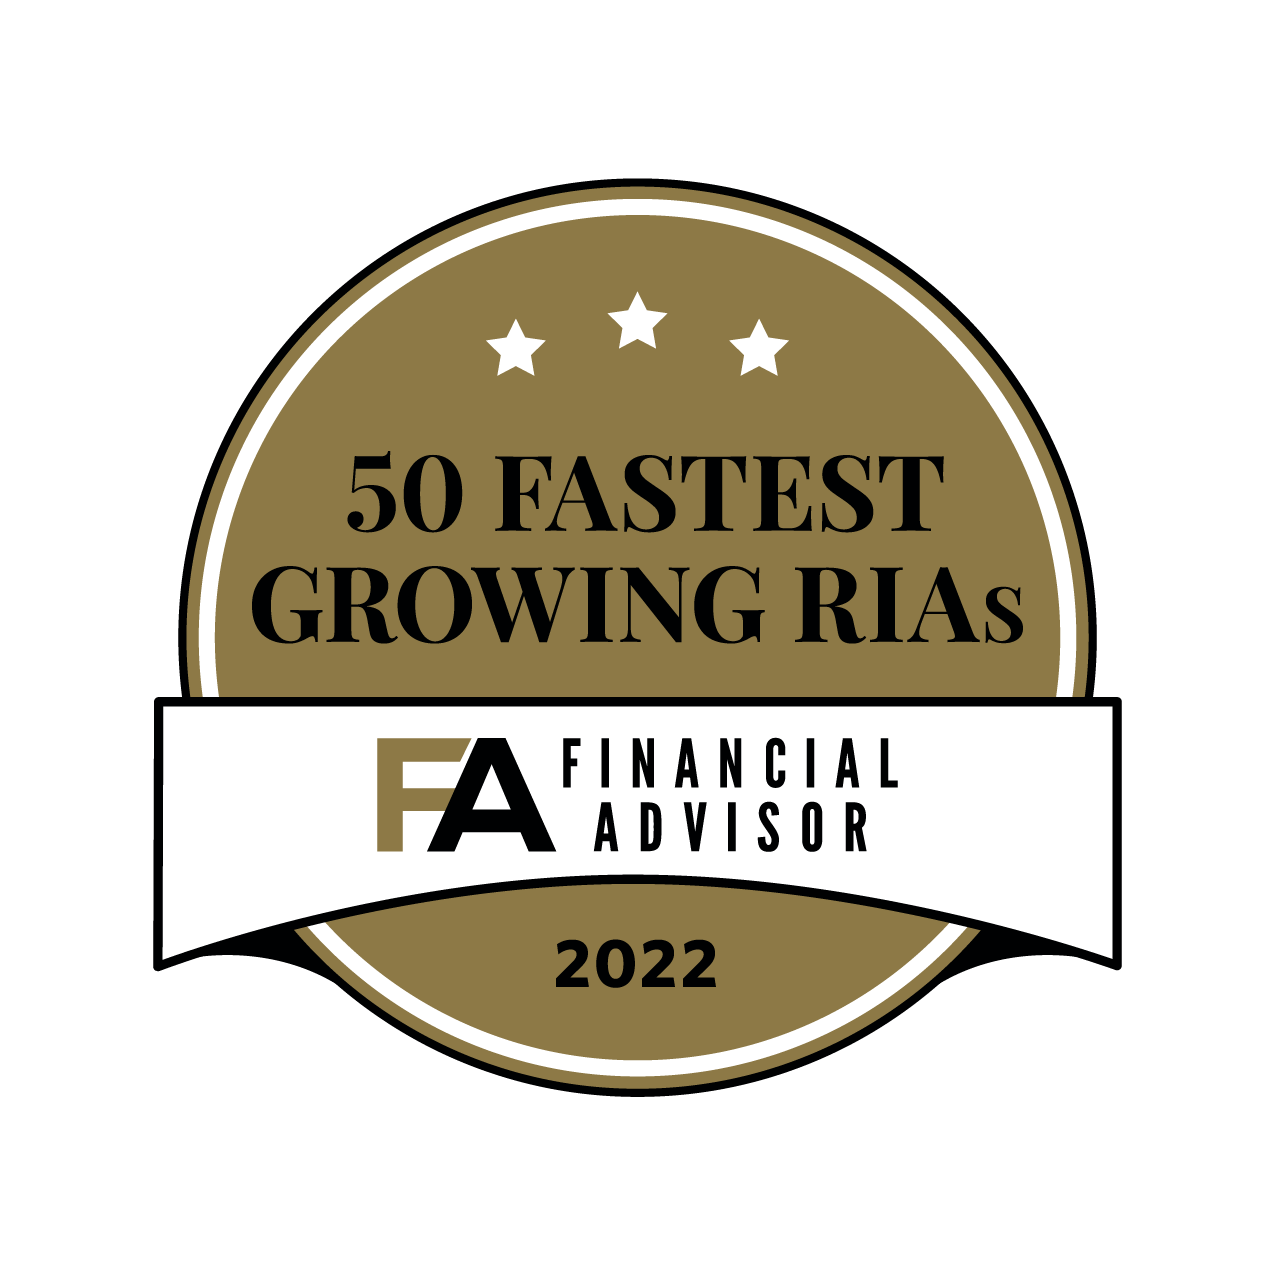 50 fastest growing RIAs